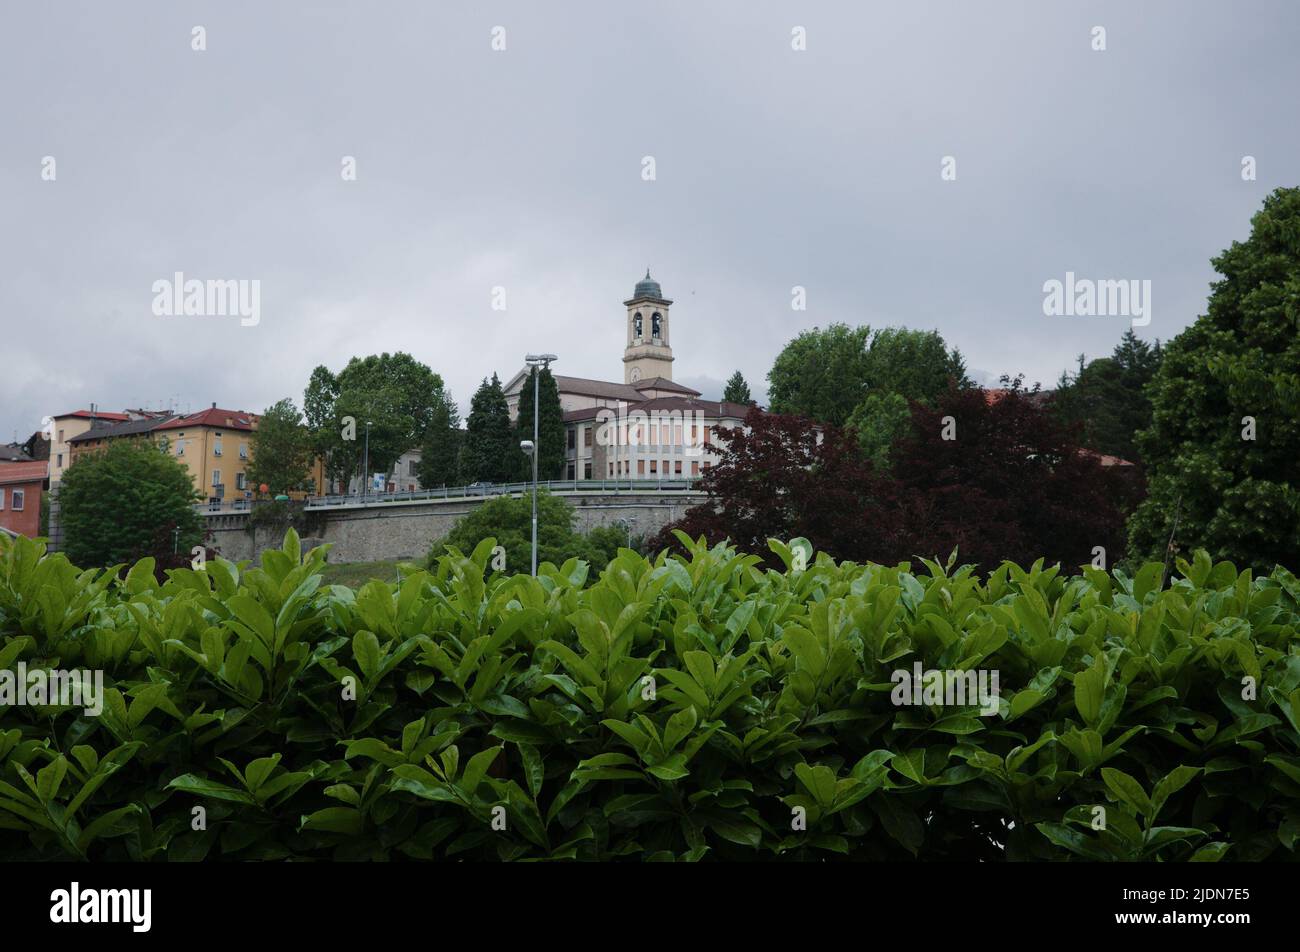 View of bell tower of Parrocchia Sant Antonino church in Borgo Val di Taro town, Parma Province, Italy. View through lush foliage to Via lungo Taro Stock Photo